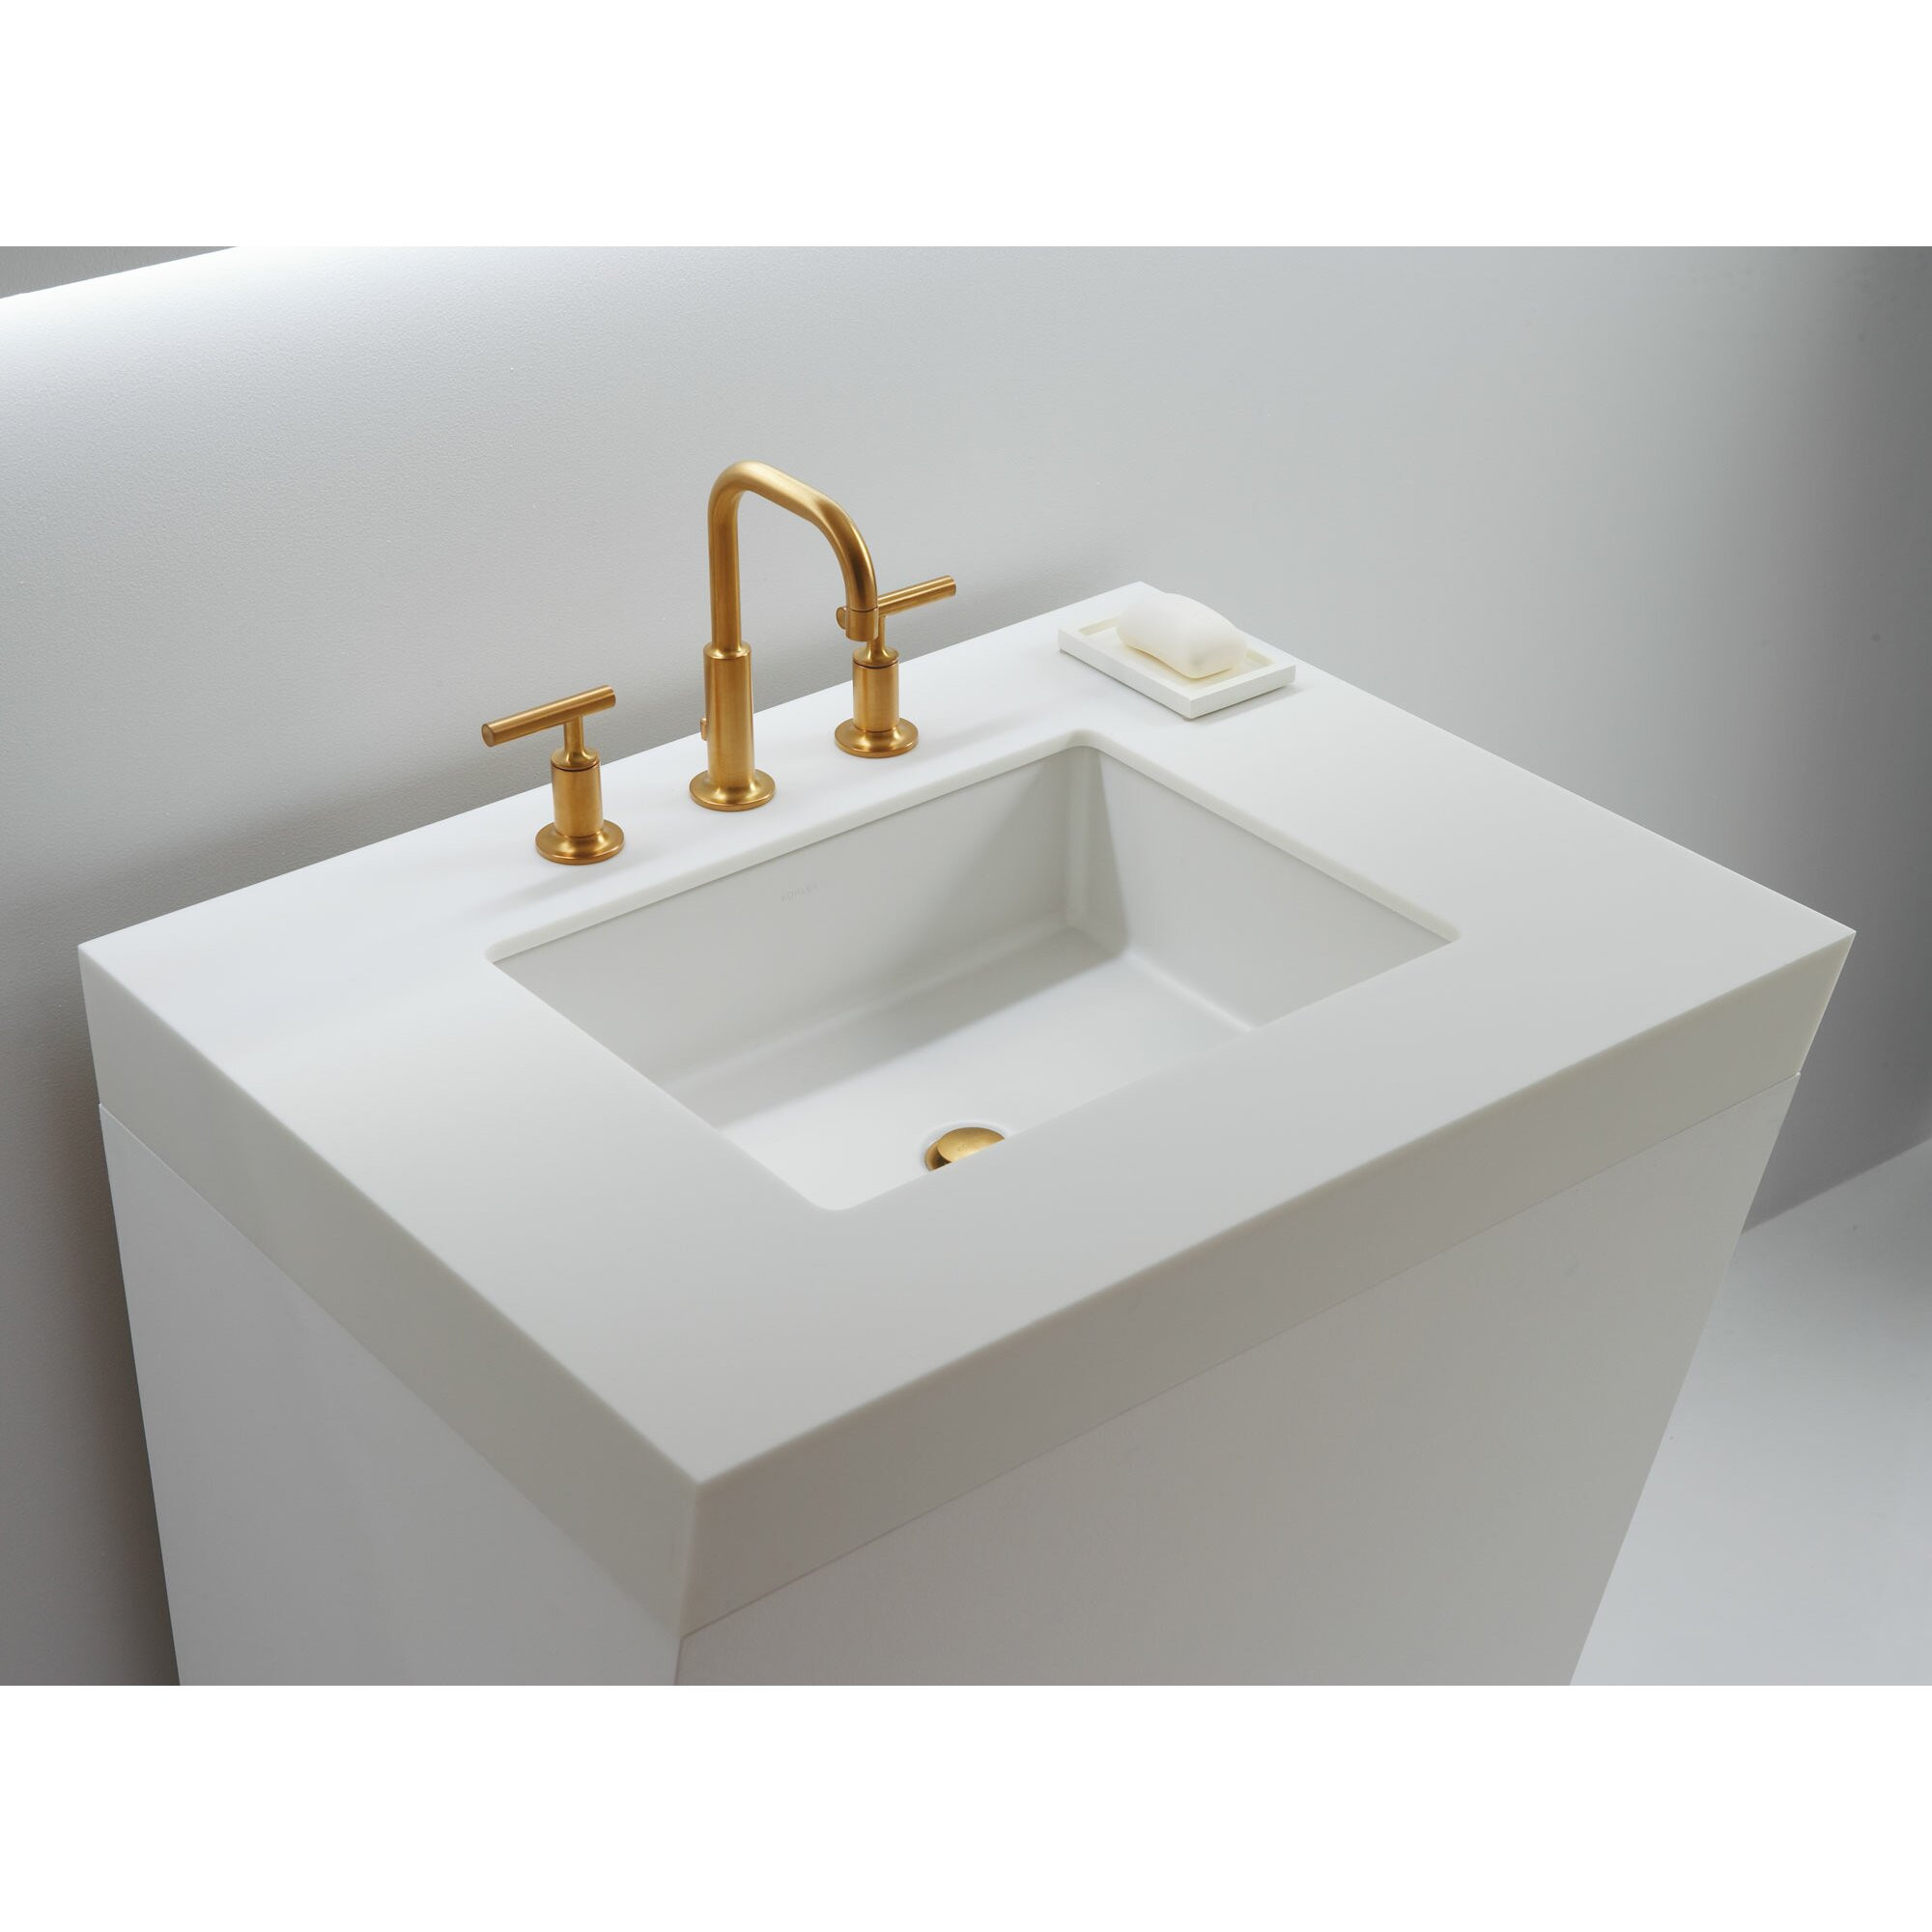 Bathroom Sinks Undermount
 Kohler Verticyl Rectangular Undermount Bathroom Sink with